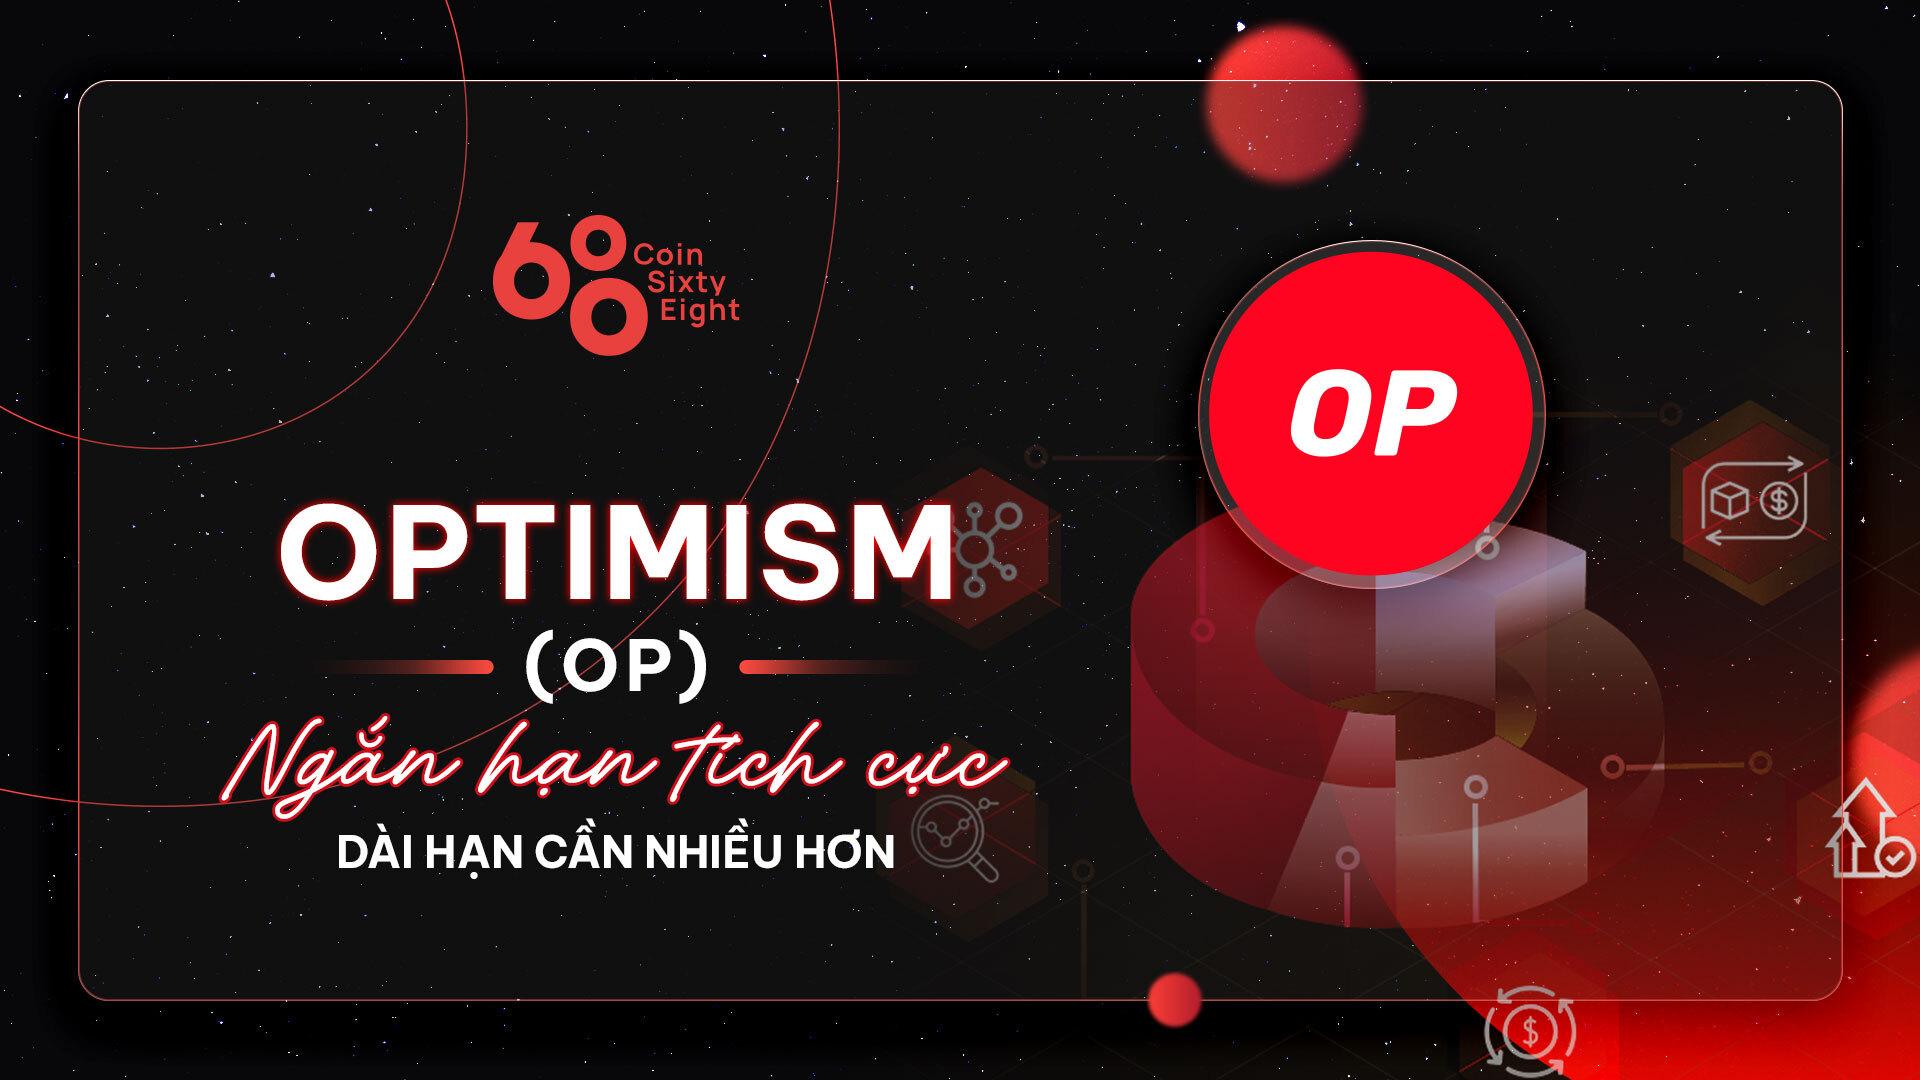 tokenomics-research-8-optimism-op-ngan-han-tich-cuc-dai-han-can-nhieu-hon